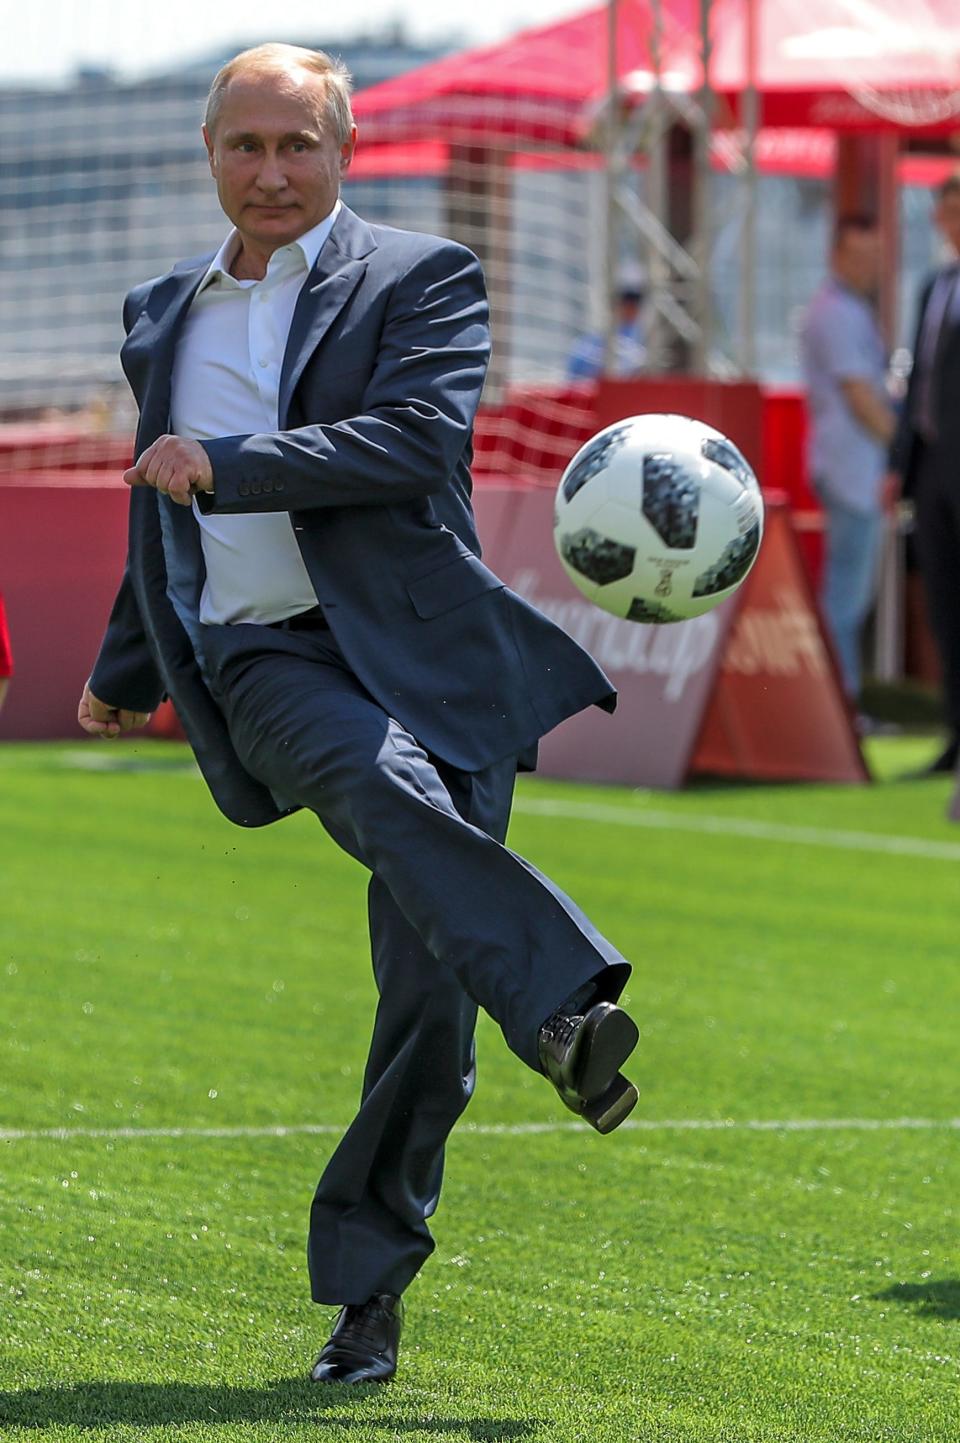 Vladimir Putin kicks a soccer ball.